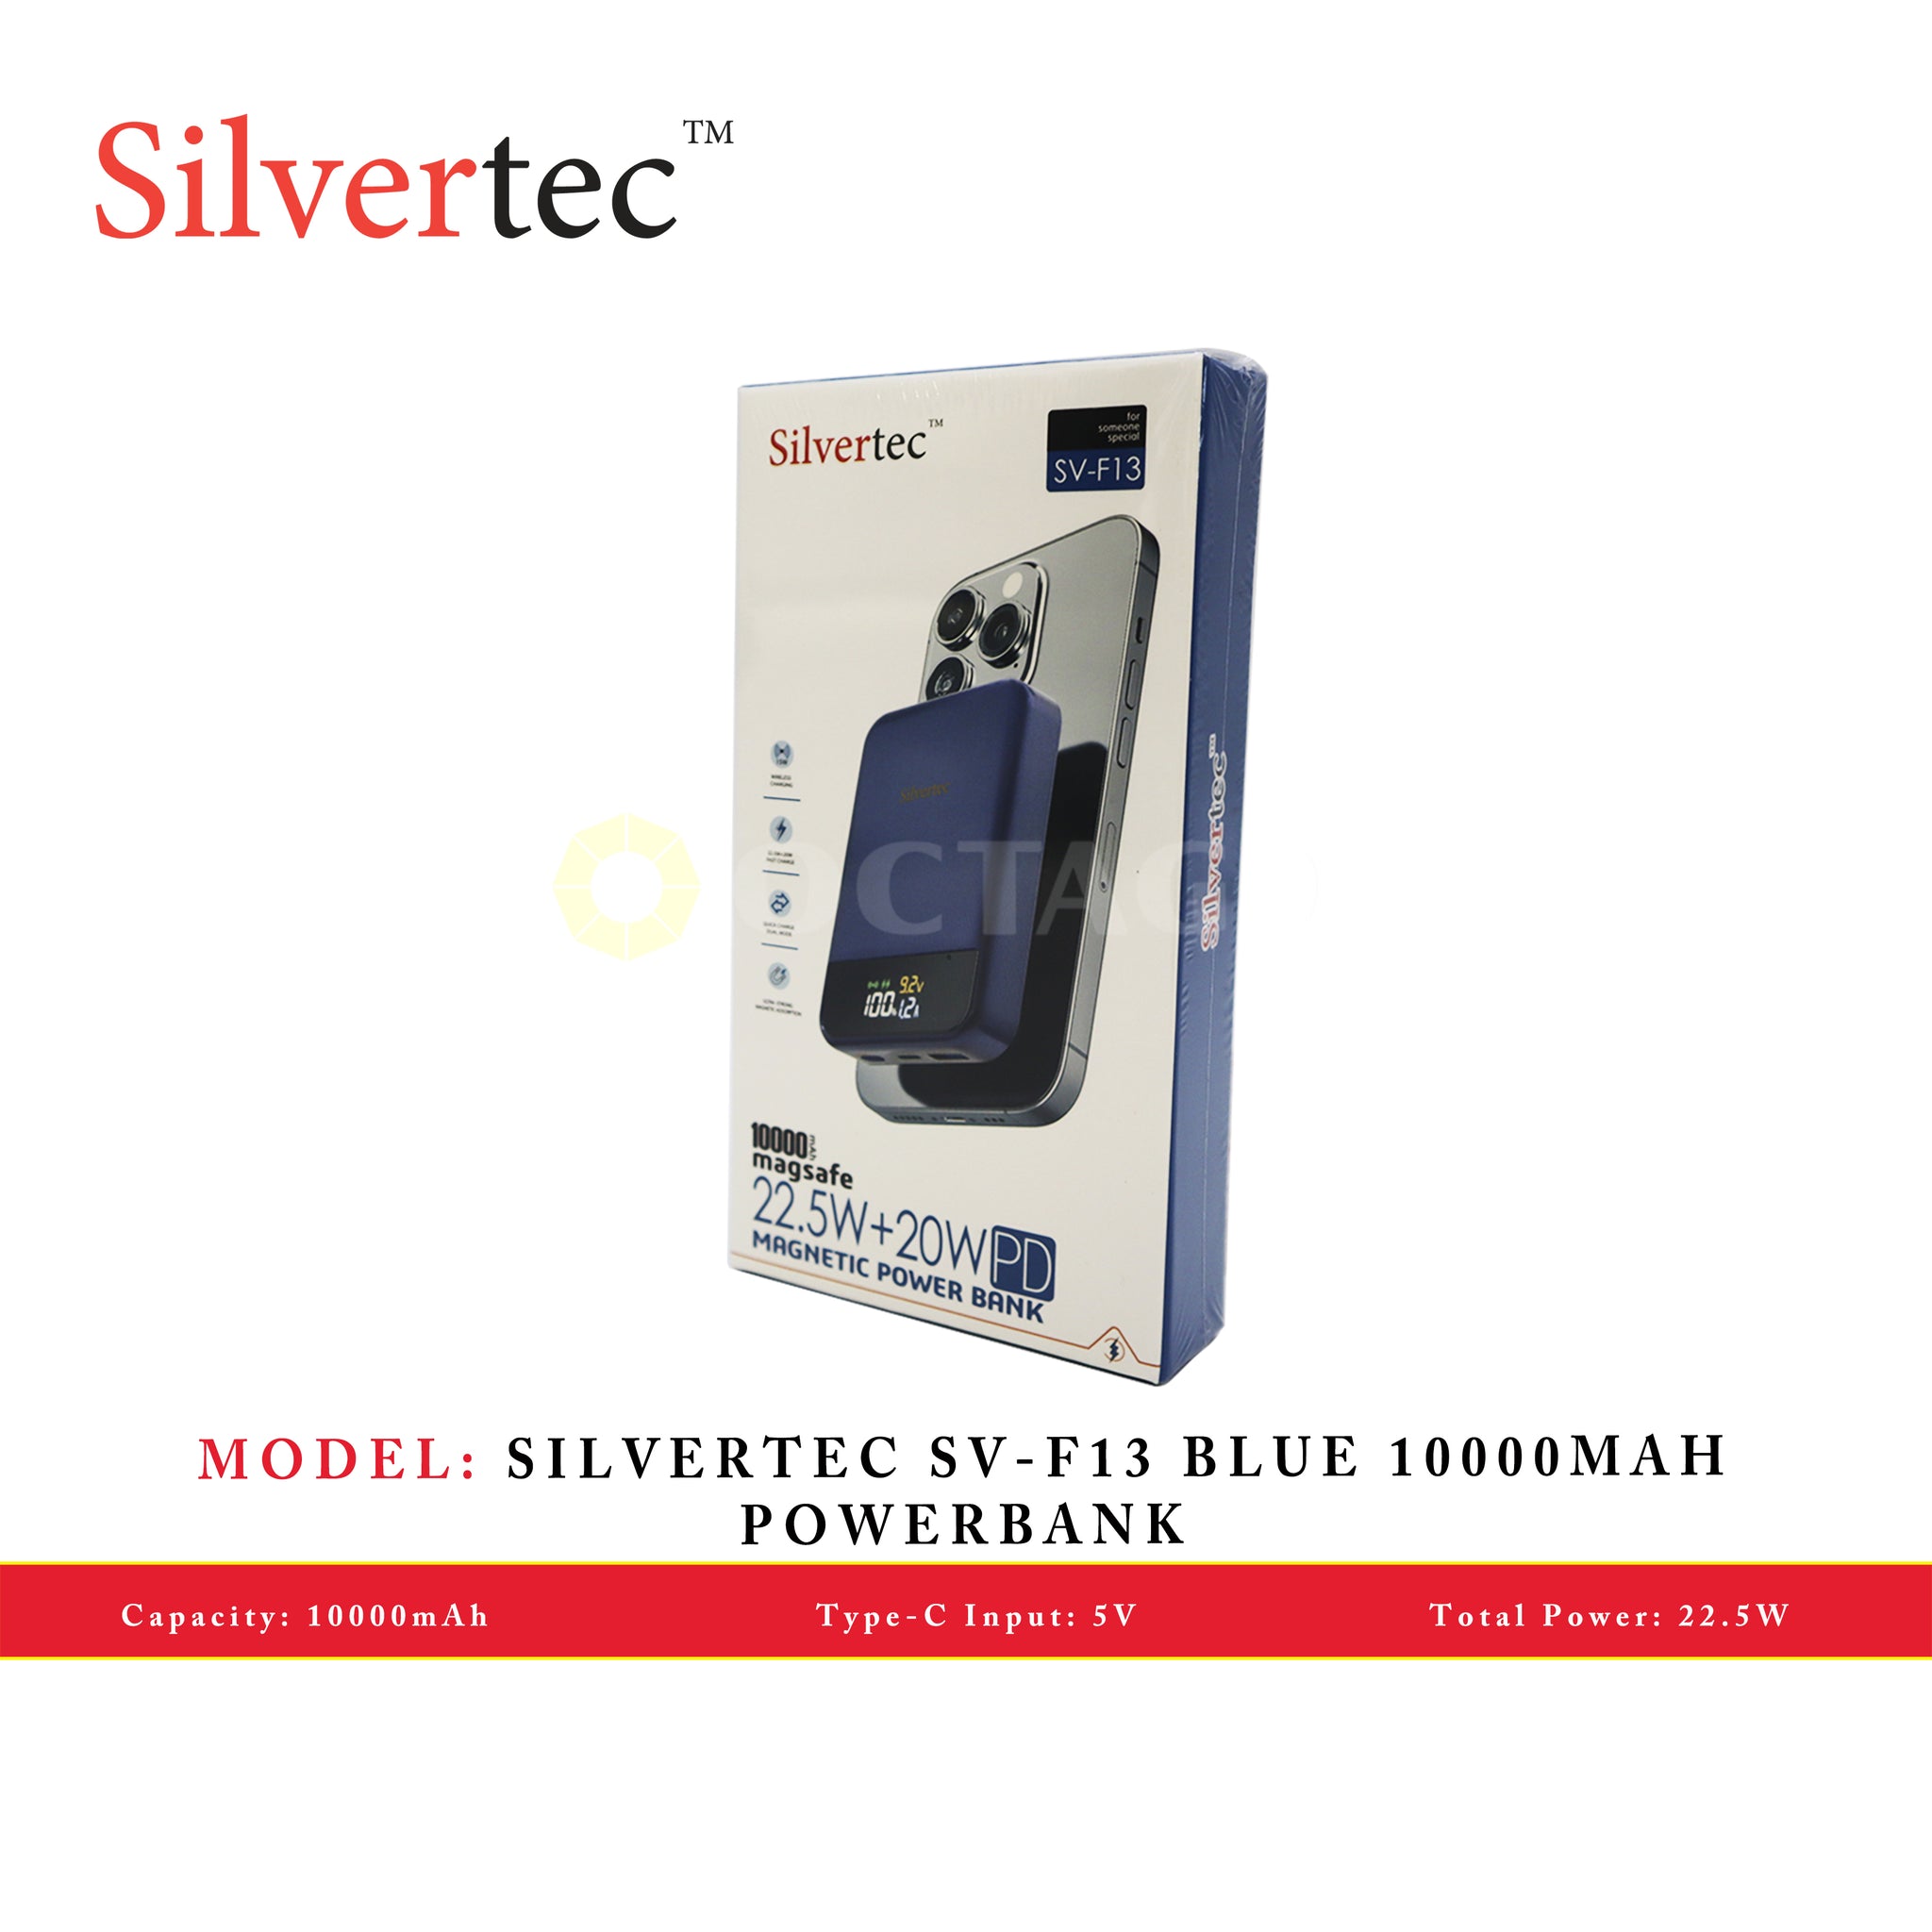 SILVERTEC SV-F13 BLUE 10000MAH POWERBANK